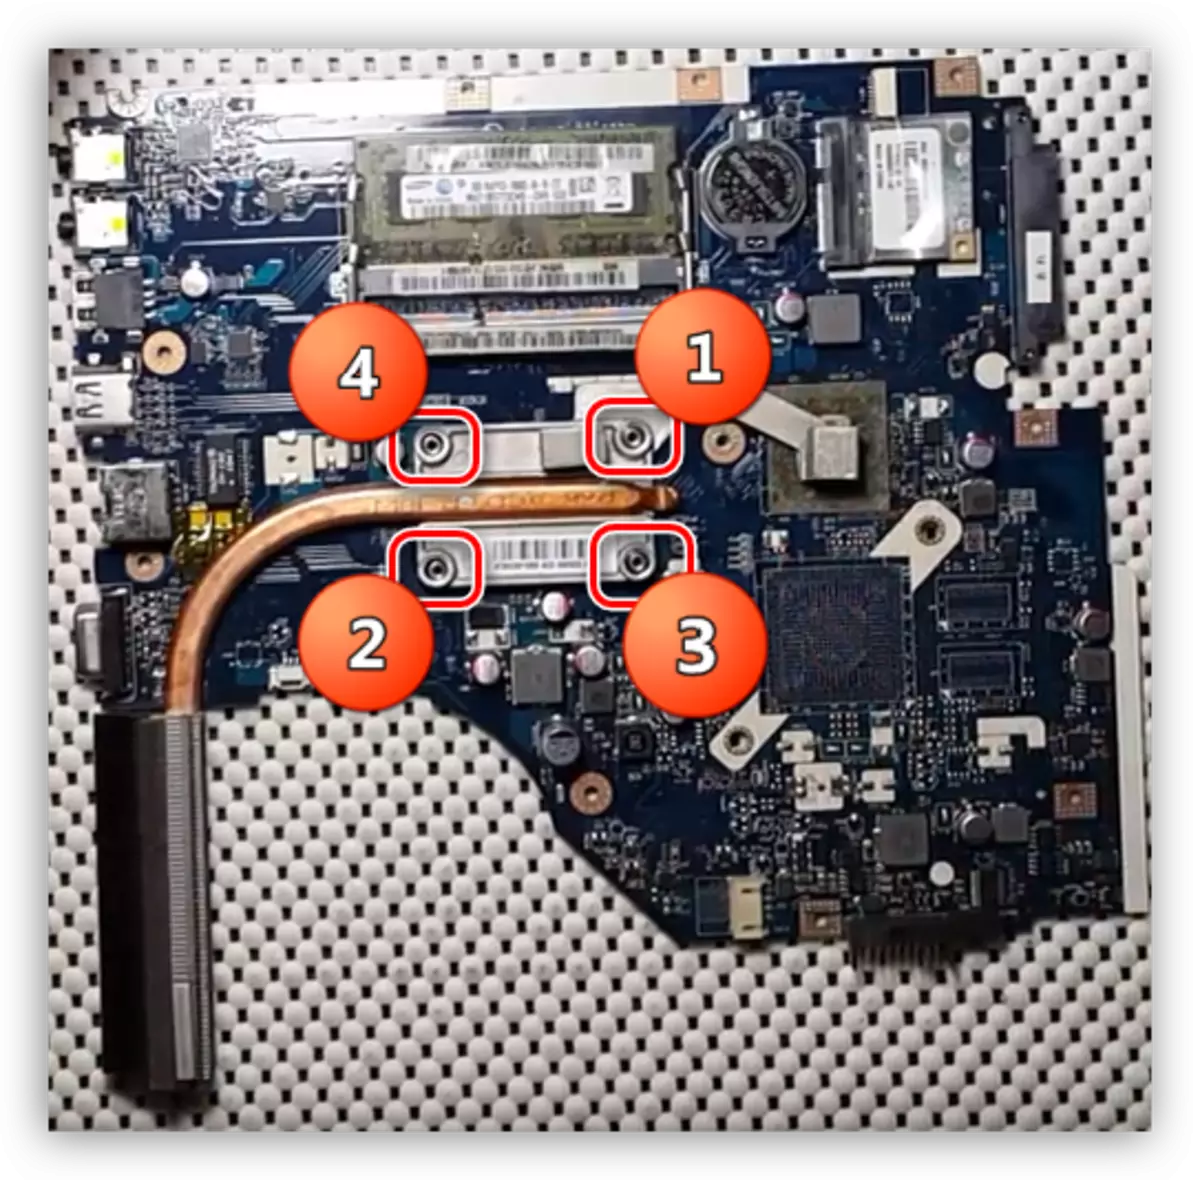 एसर अस्पायर 5253 लैपटॉप शीतलन प्रणाली पर स्क्रू स्क्रू प्रक्रिया